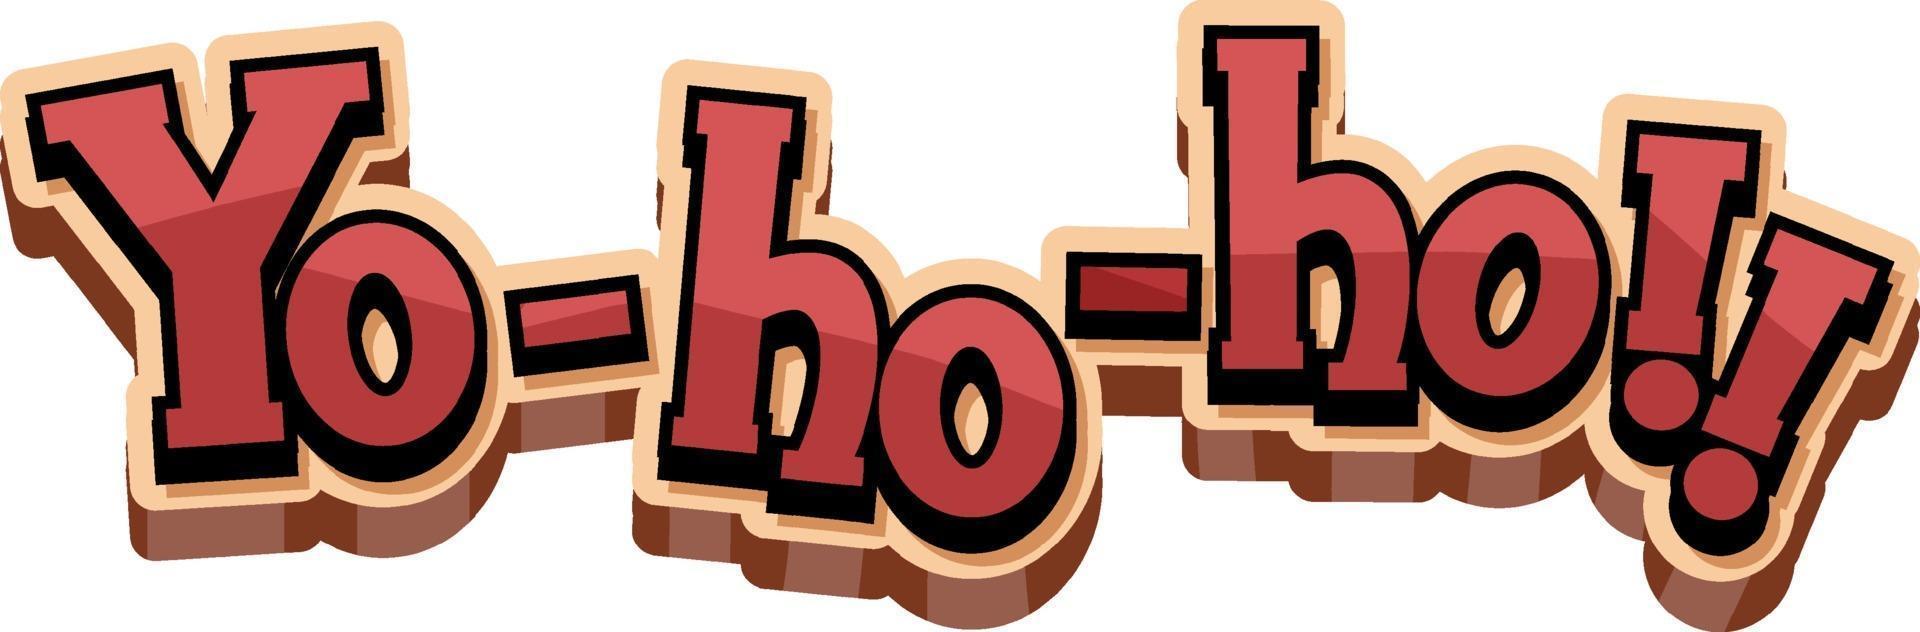 Piratenkonzept mit Jo-ho-ho-Wortfahne auf weißem Hintergrund vektor